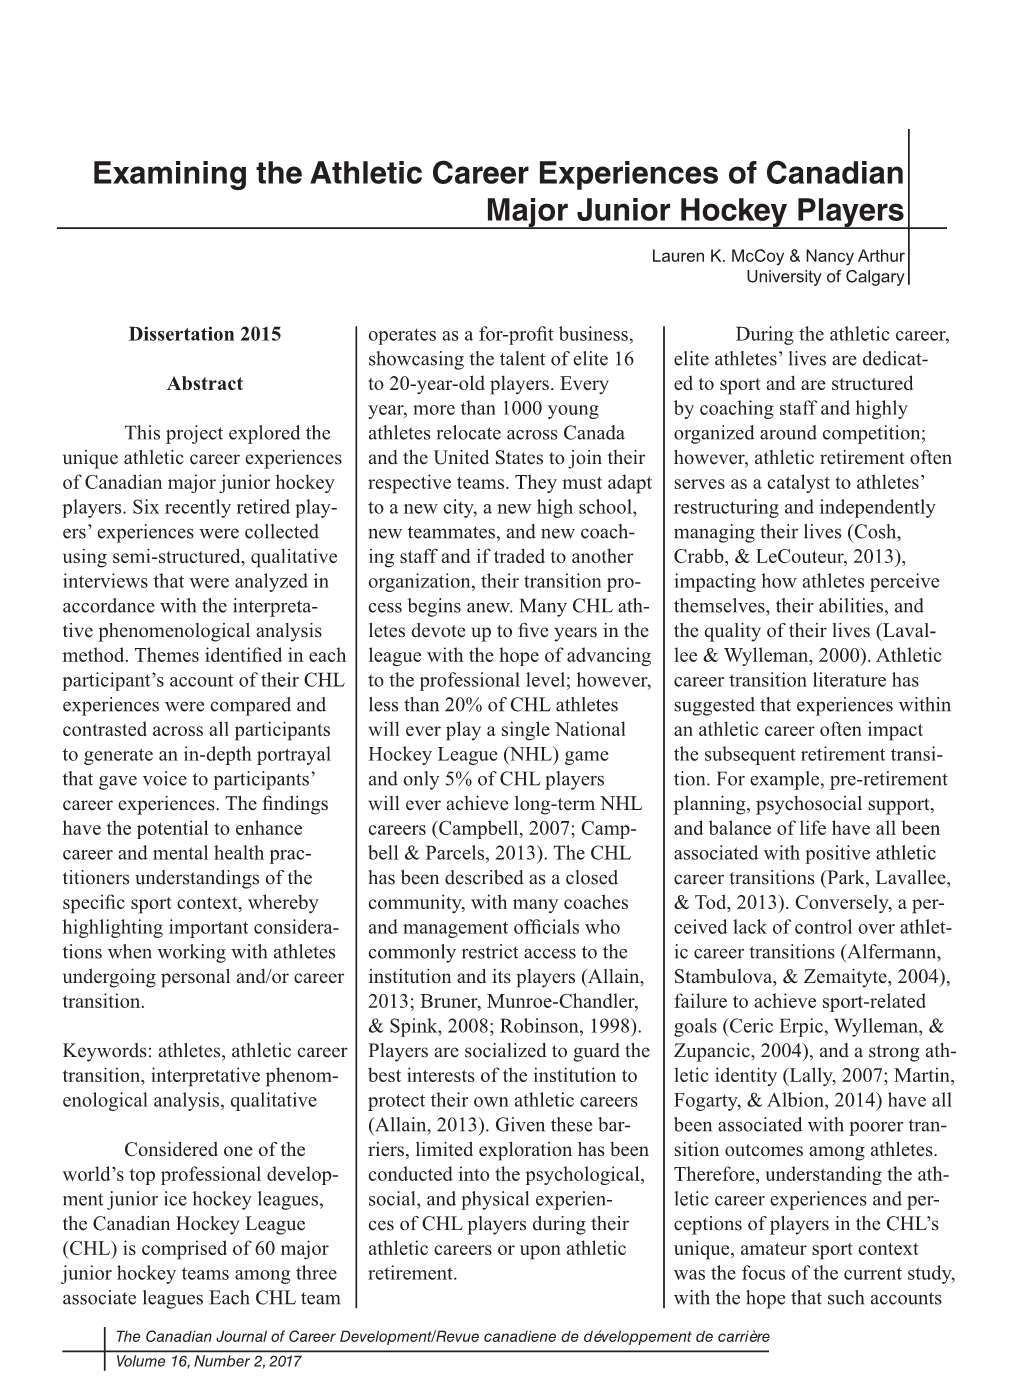 Examining the Athletic Career Experiences of Canadian Major Junior Hockey Players